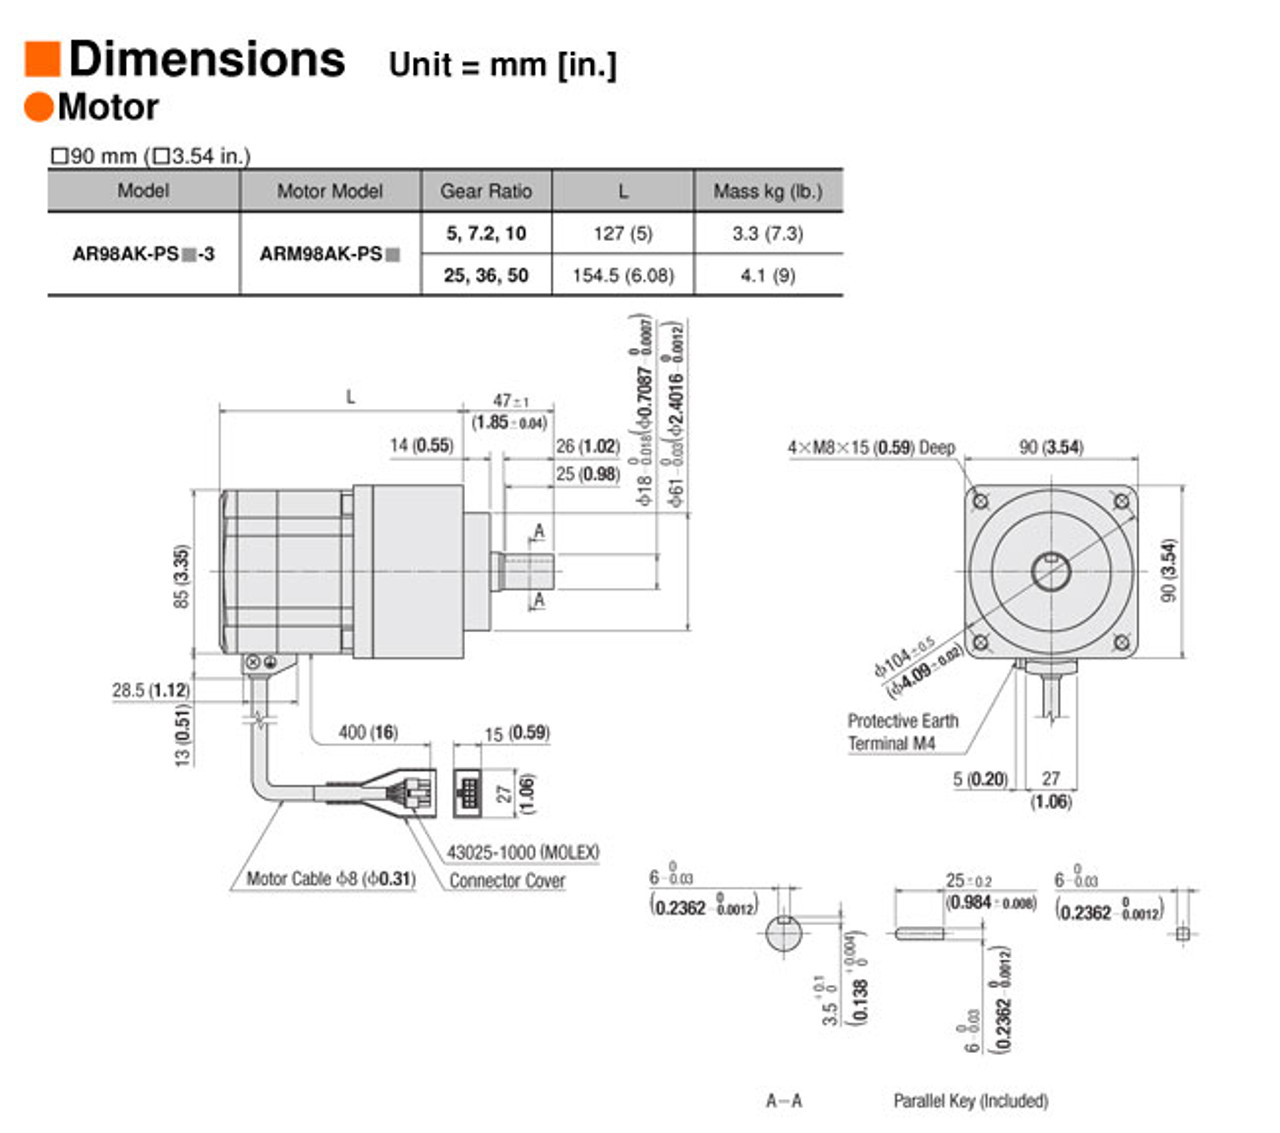 AR98AK-PS7-3 - Dimensions